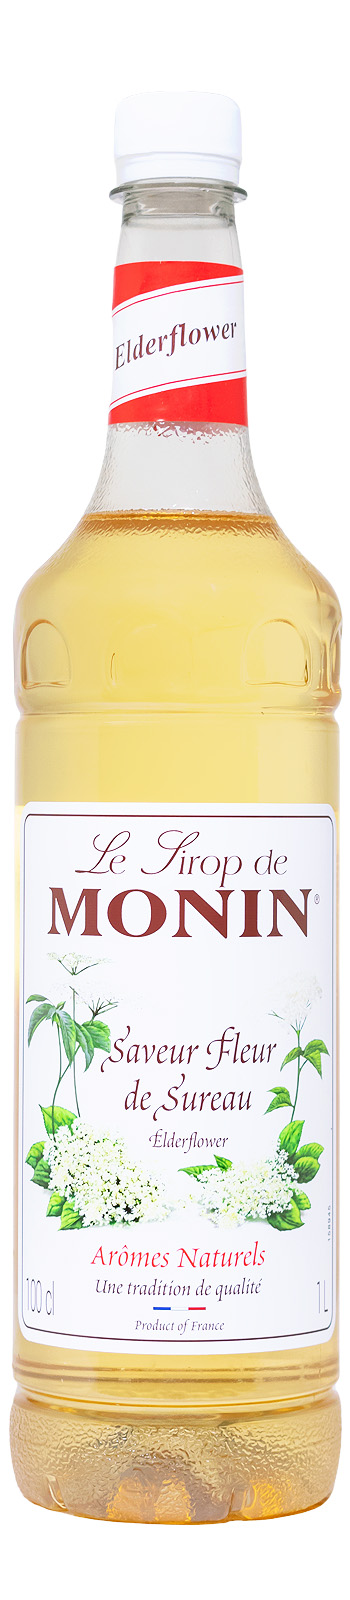 Monin Holunderblüte Fleur de Sureau Sirup PET-Flasche - 1 Liter